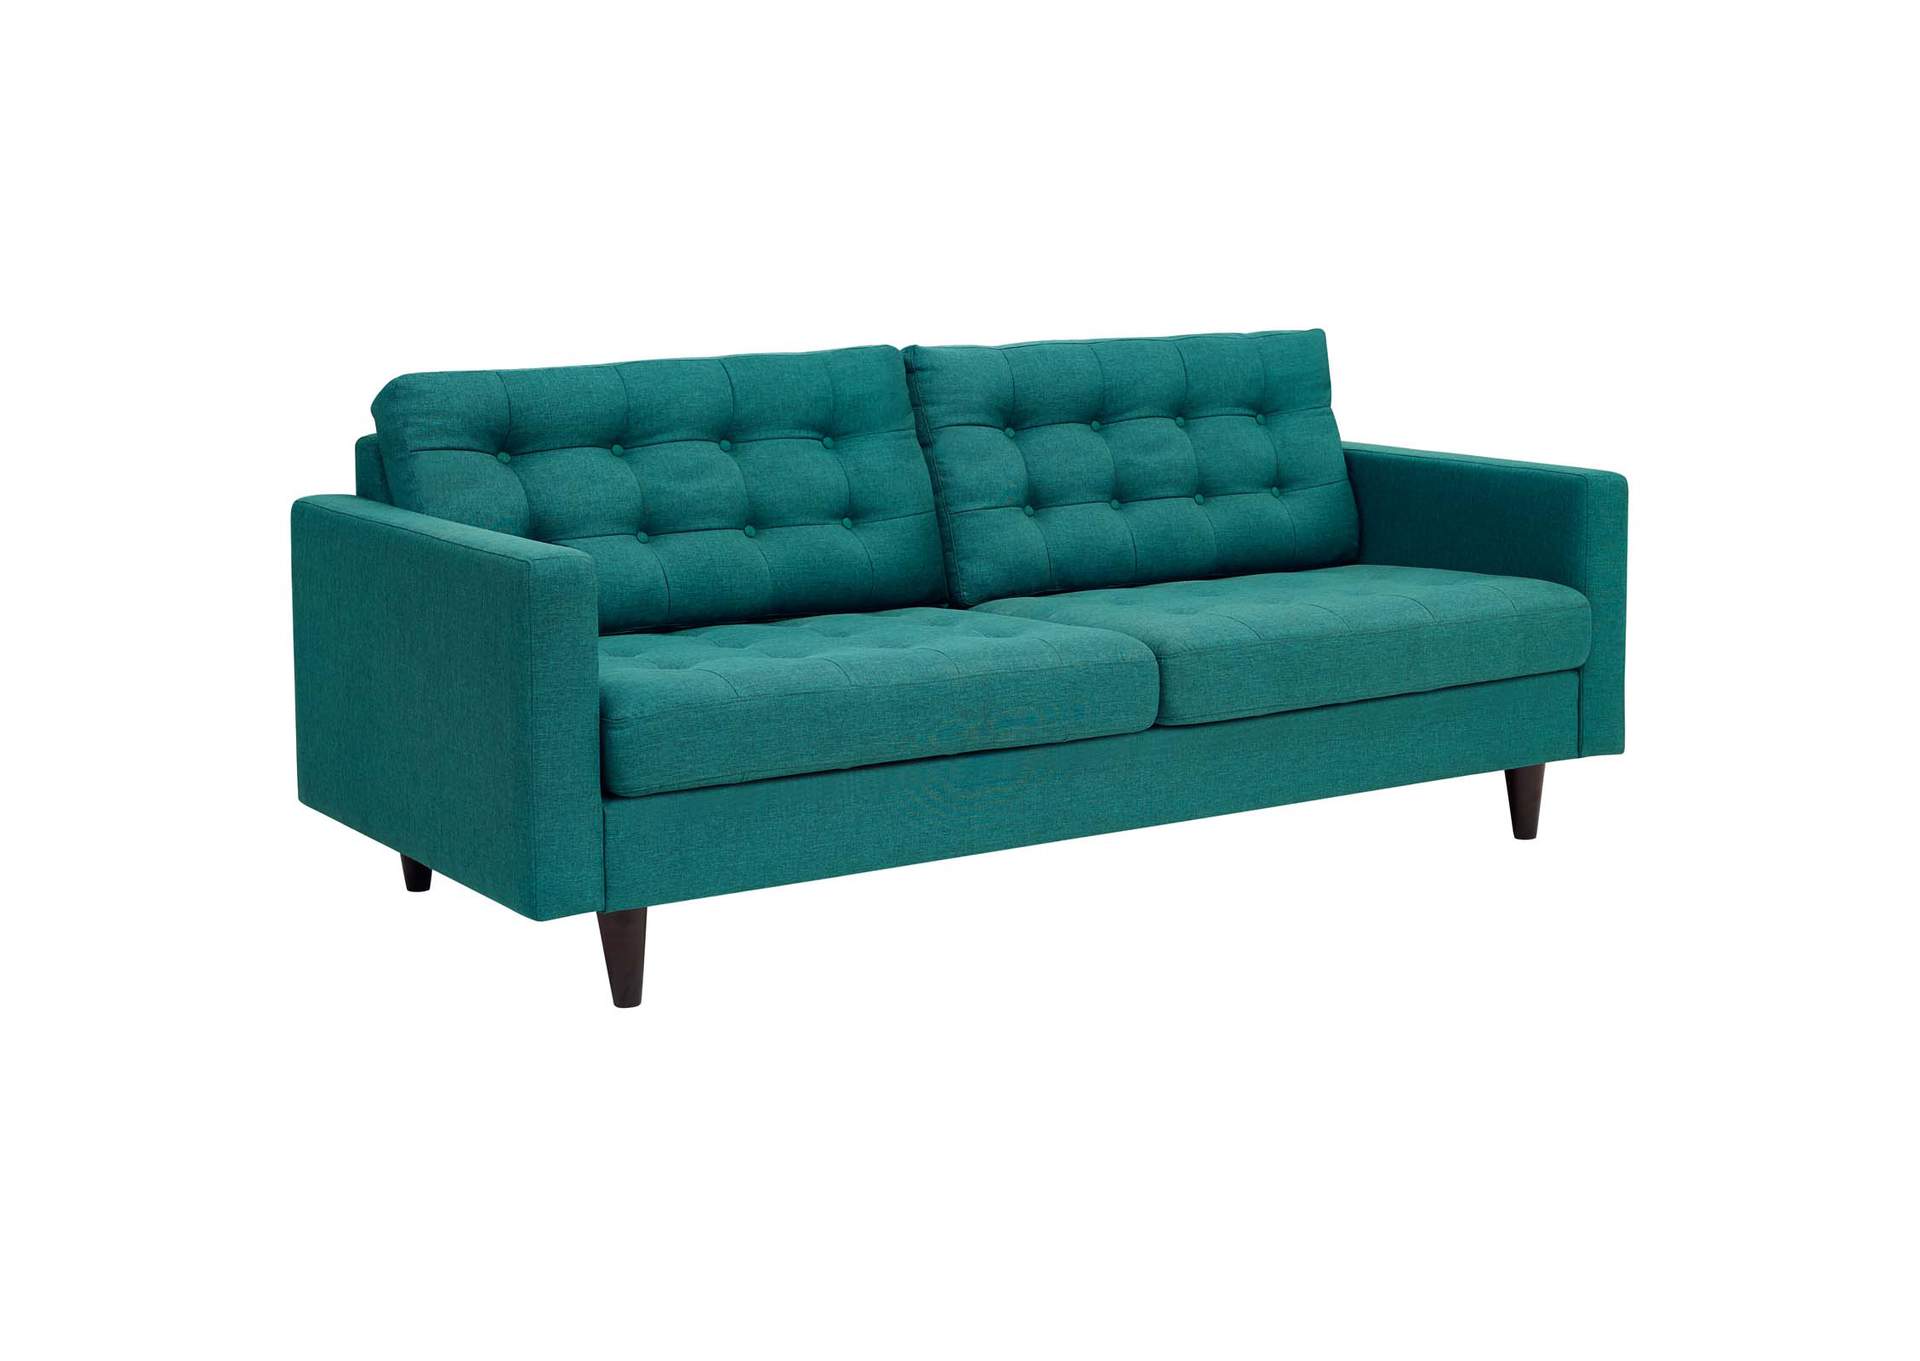 Teal Empress Upholstered Fabric Sofa,Modway